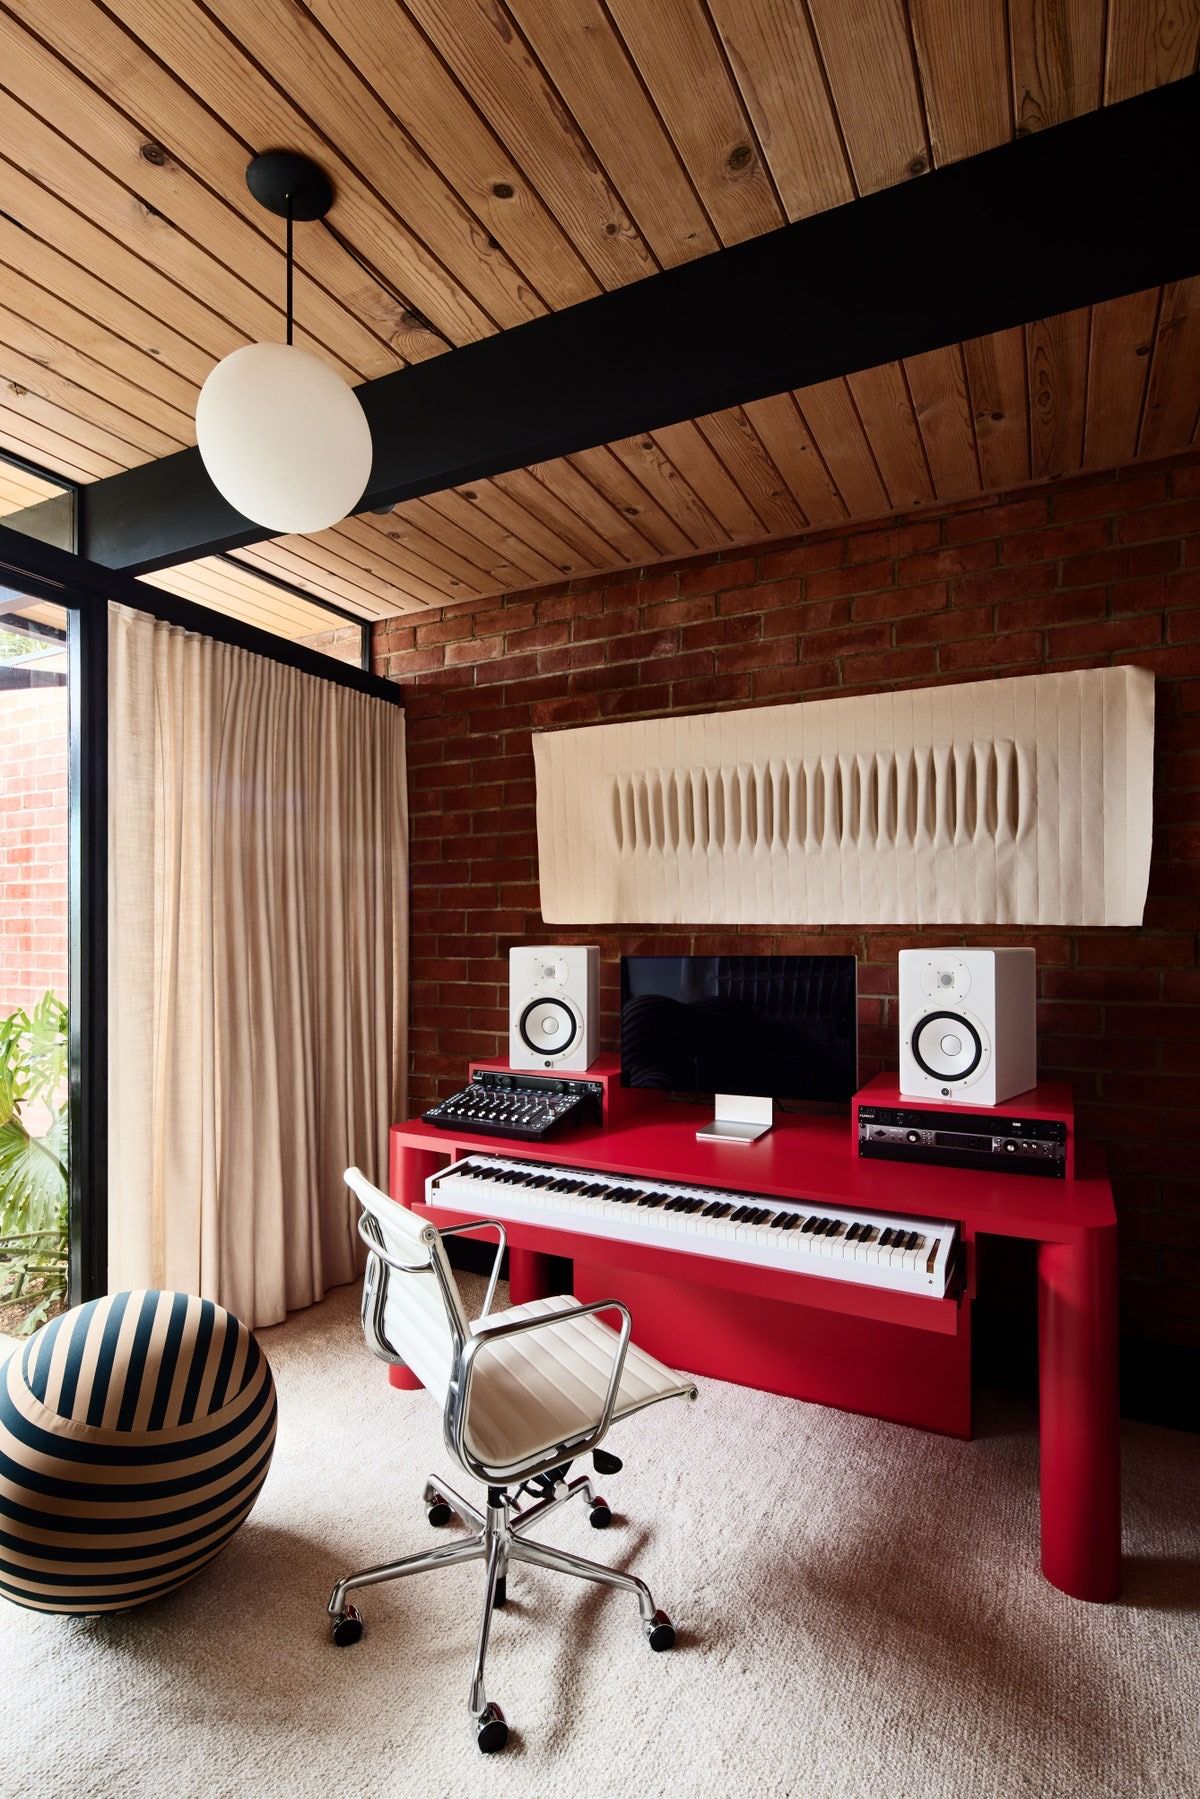  Music Studio Desk product image 8